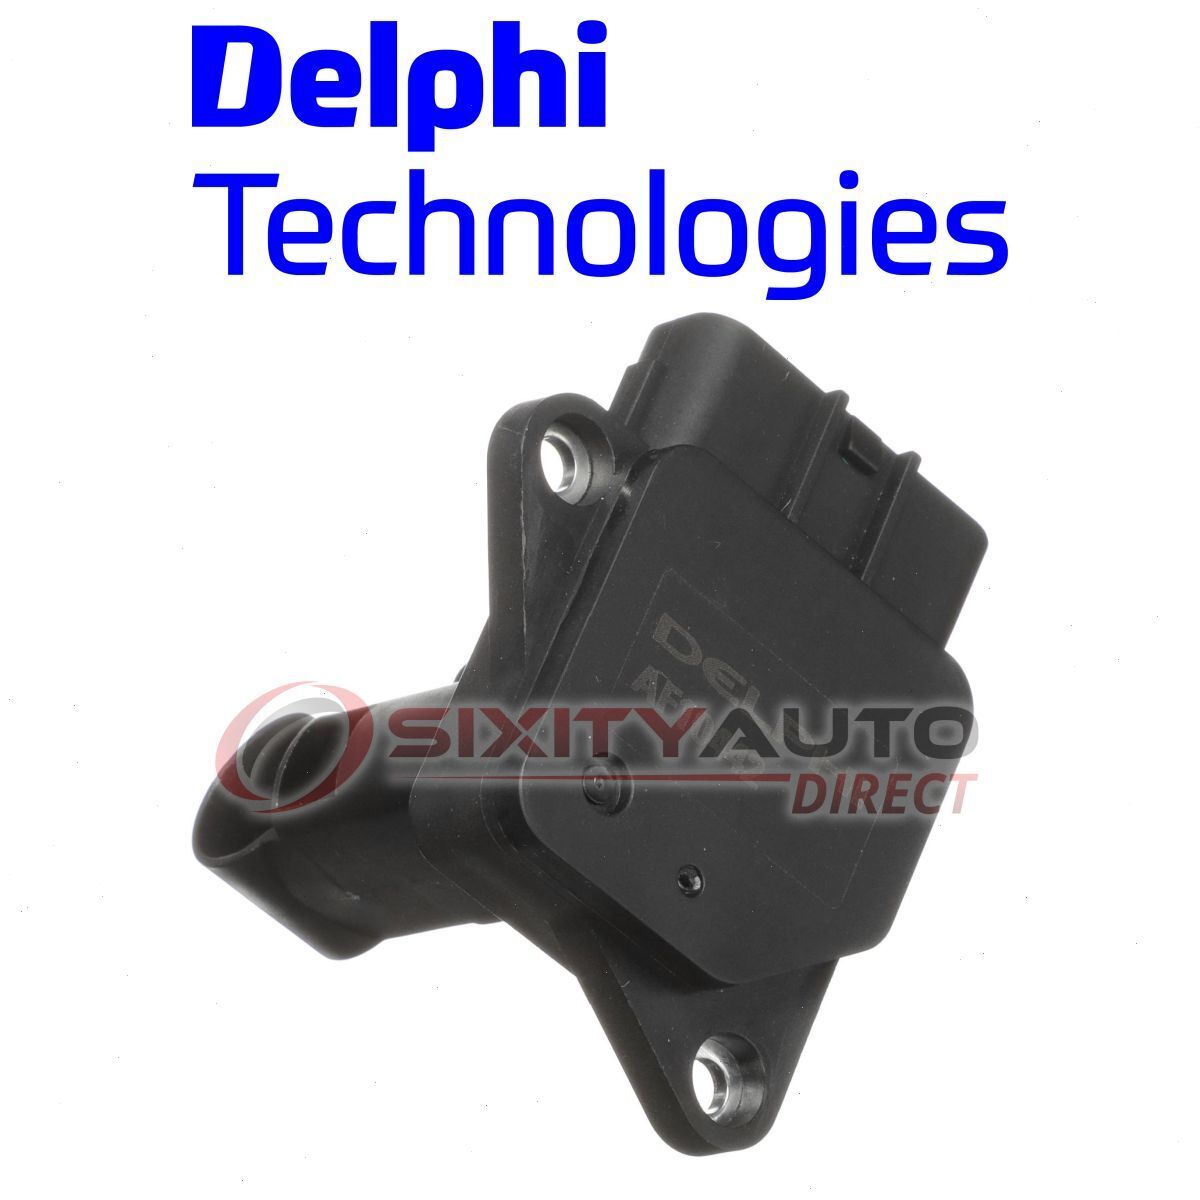 Delphi Mass Air Flow Sensor for 2005-2009 Jaguar Super V8 4.2L V8 Intake fj